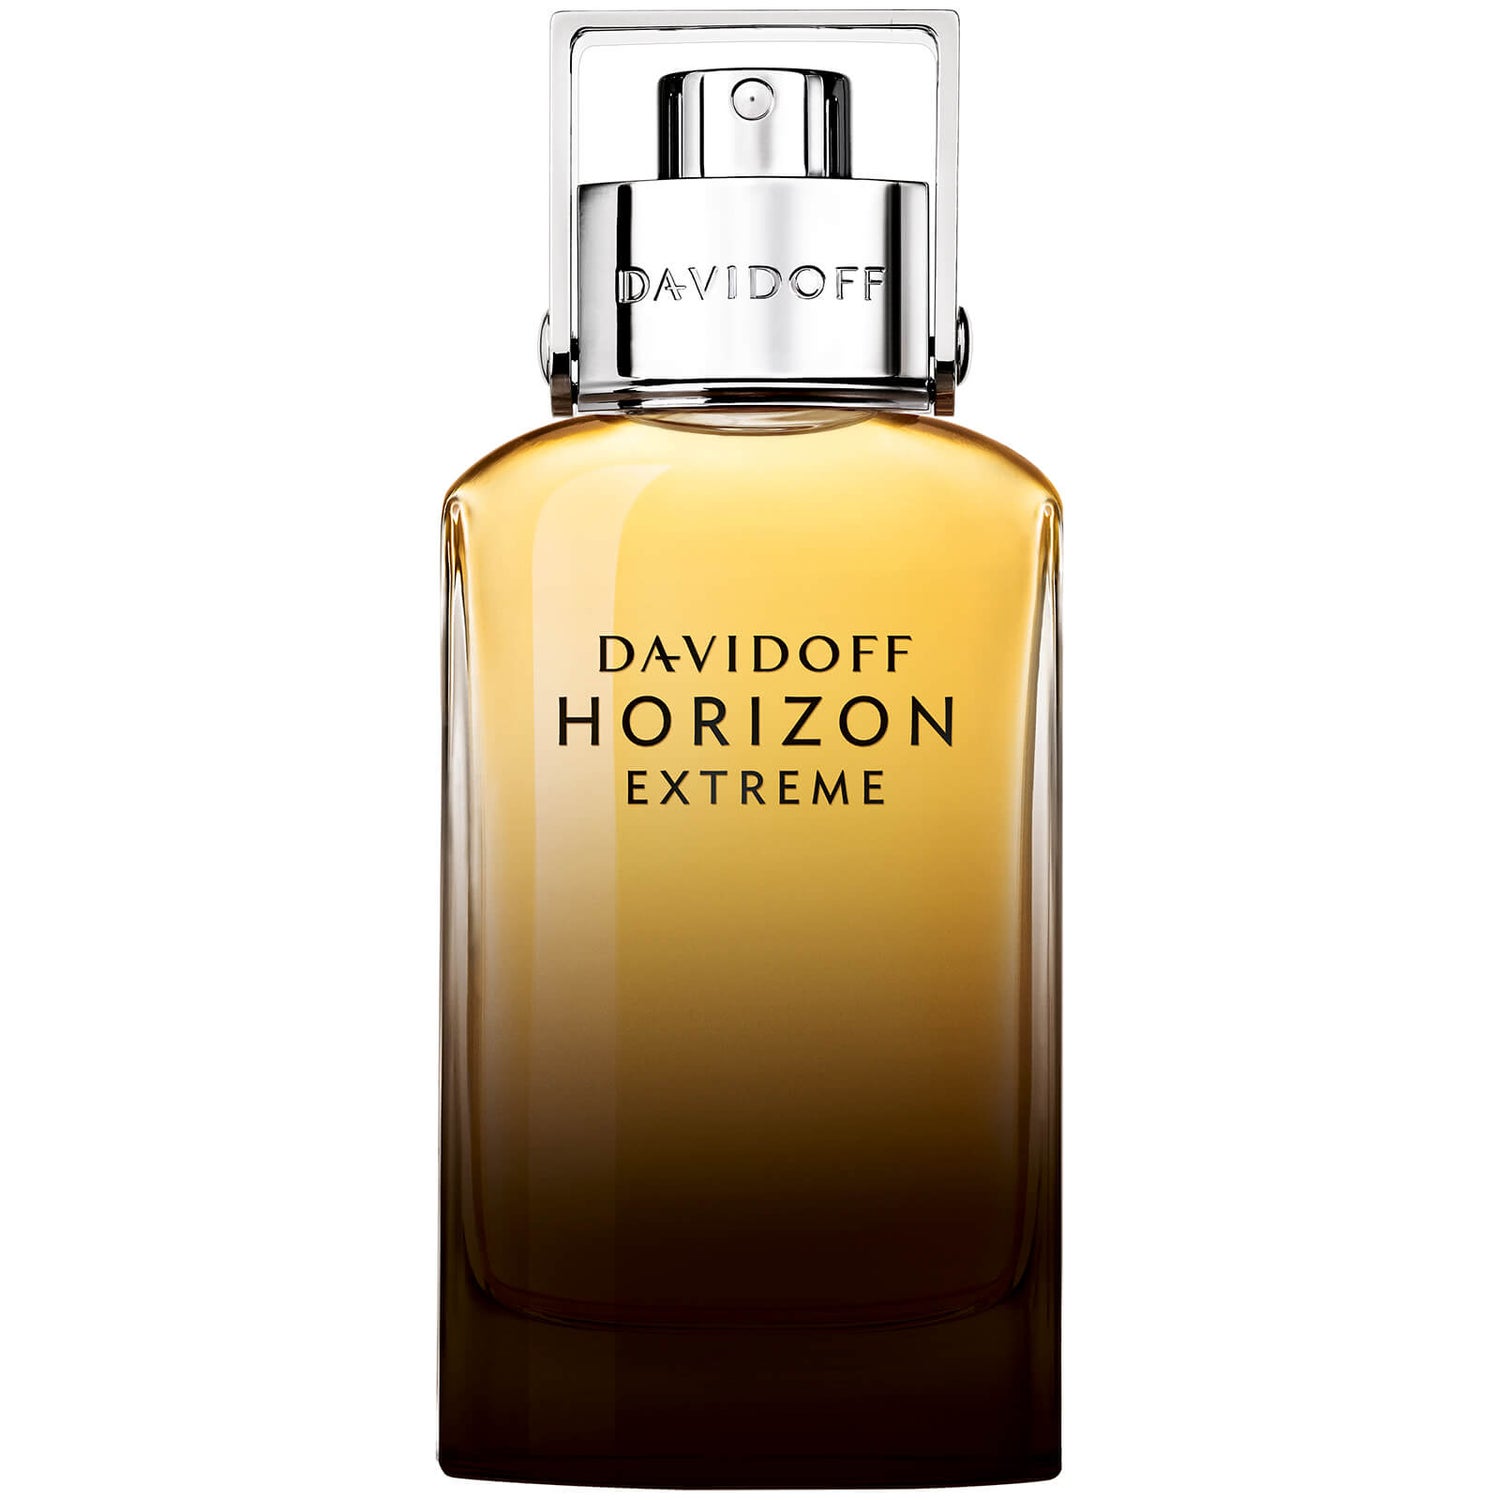 Davidoff Horizon Extreme Eau de Parfum 40ml